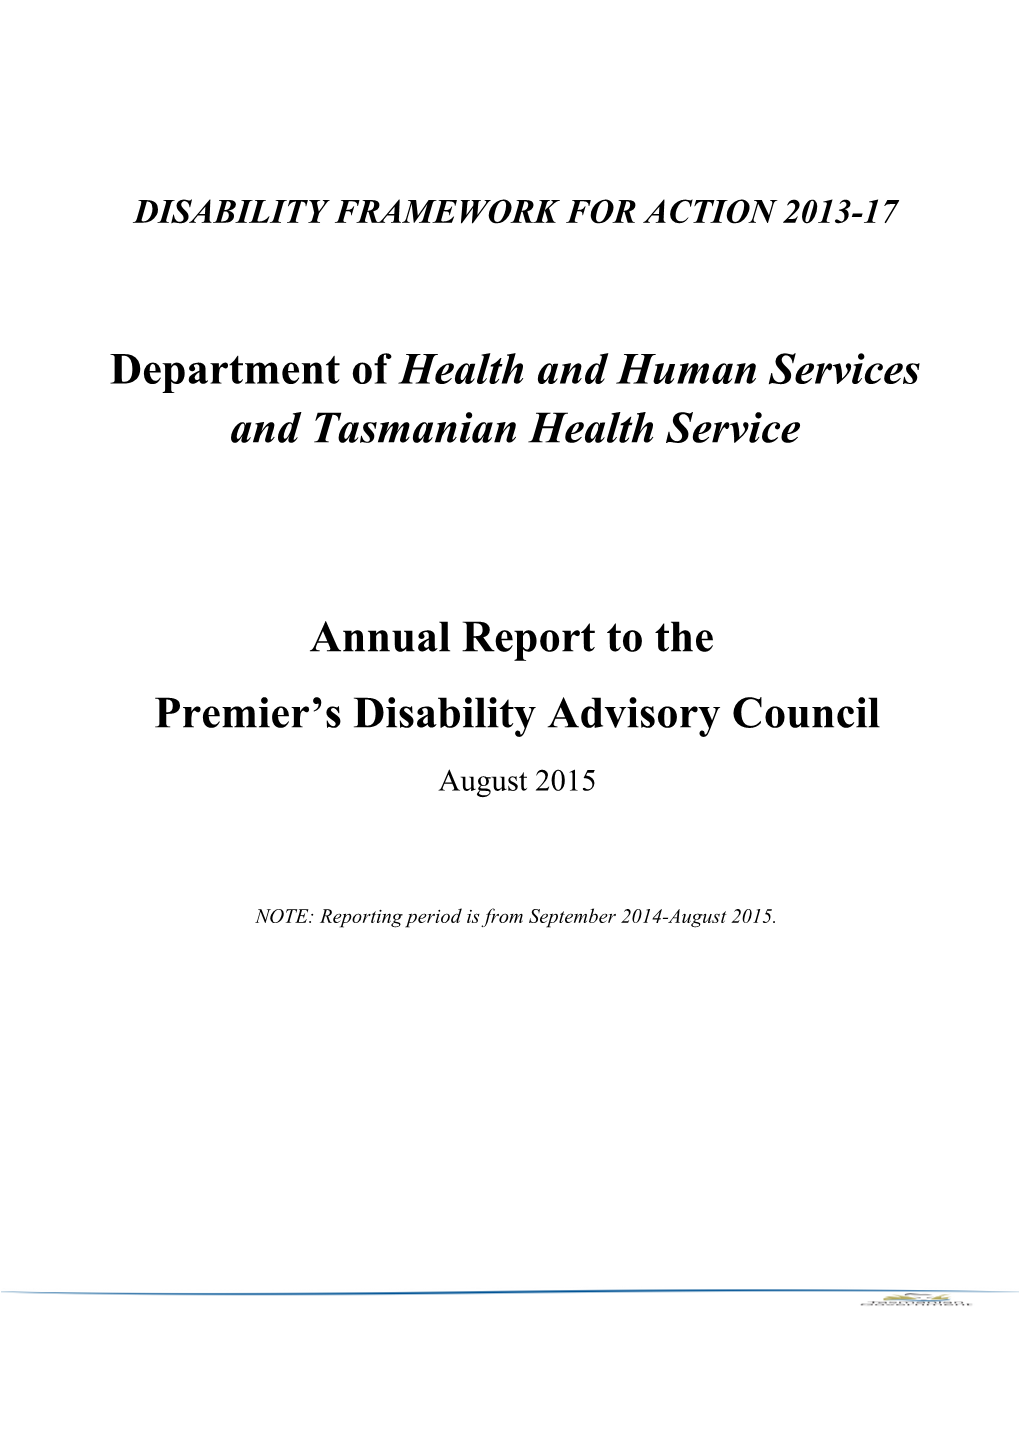 Disability Framework for Action 2013-17